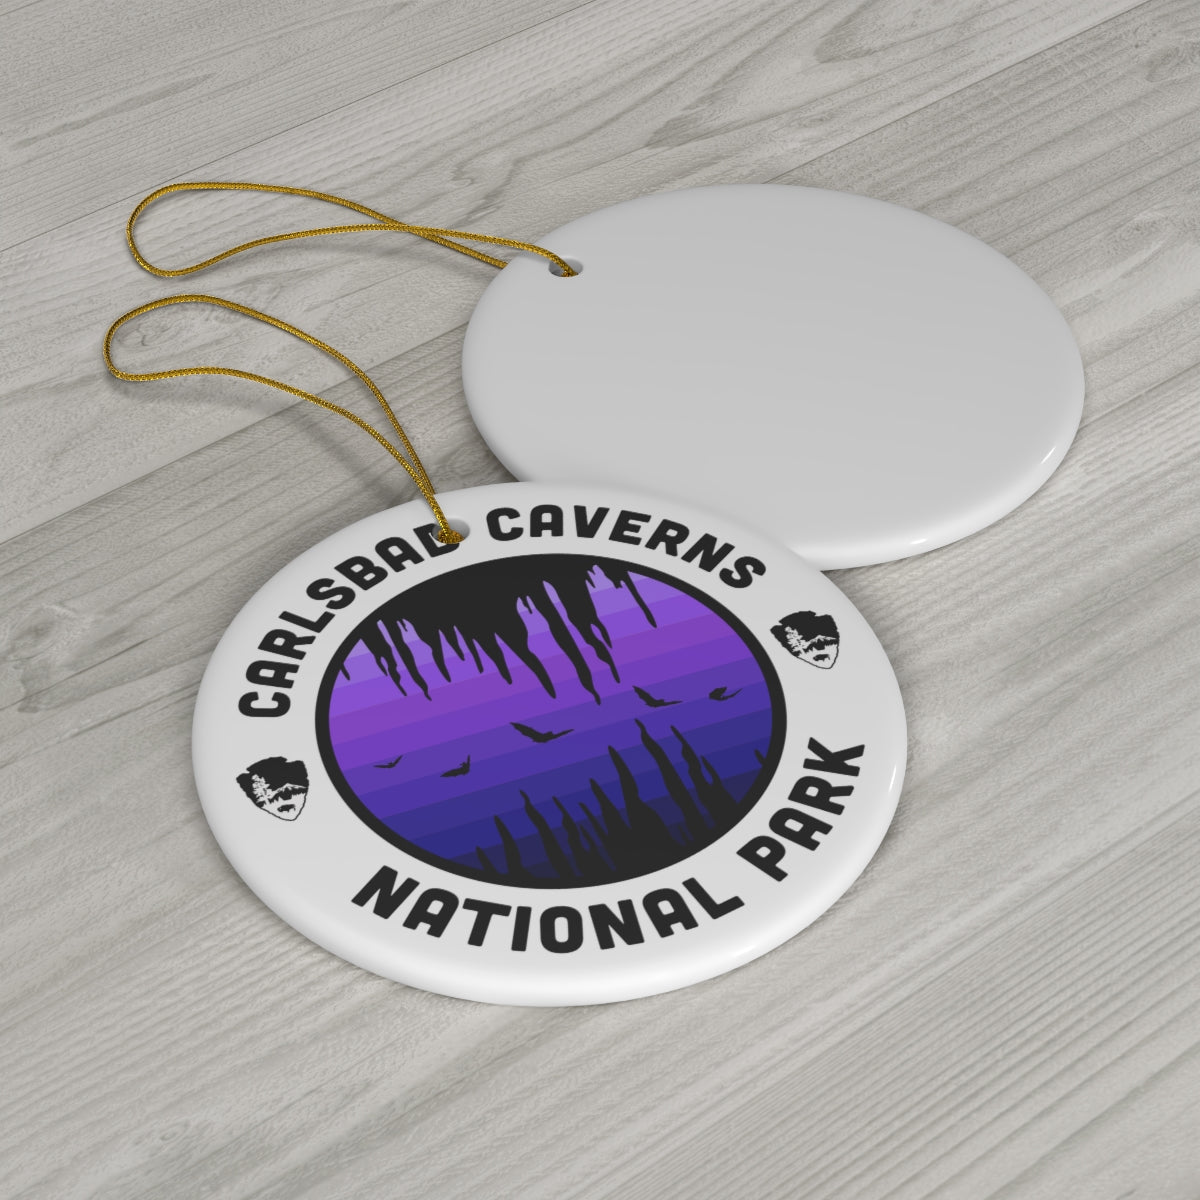 Carlsbad Caverns National Park Ornament - Purple Round Emblem Design